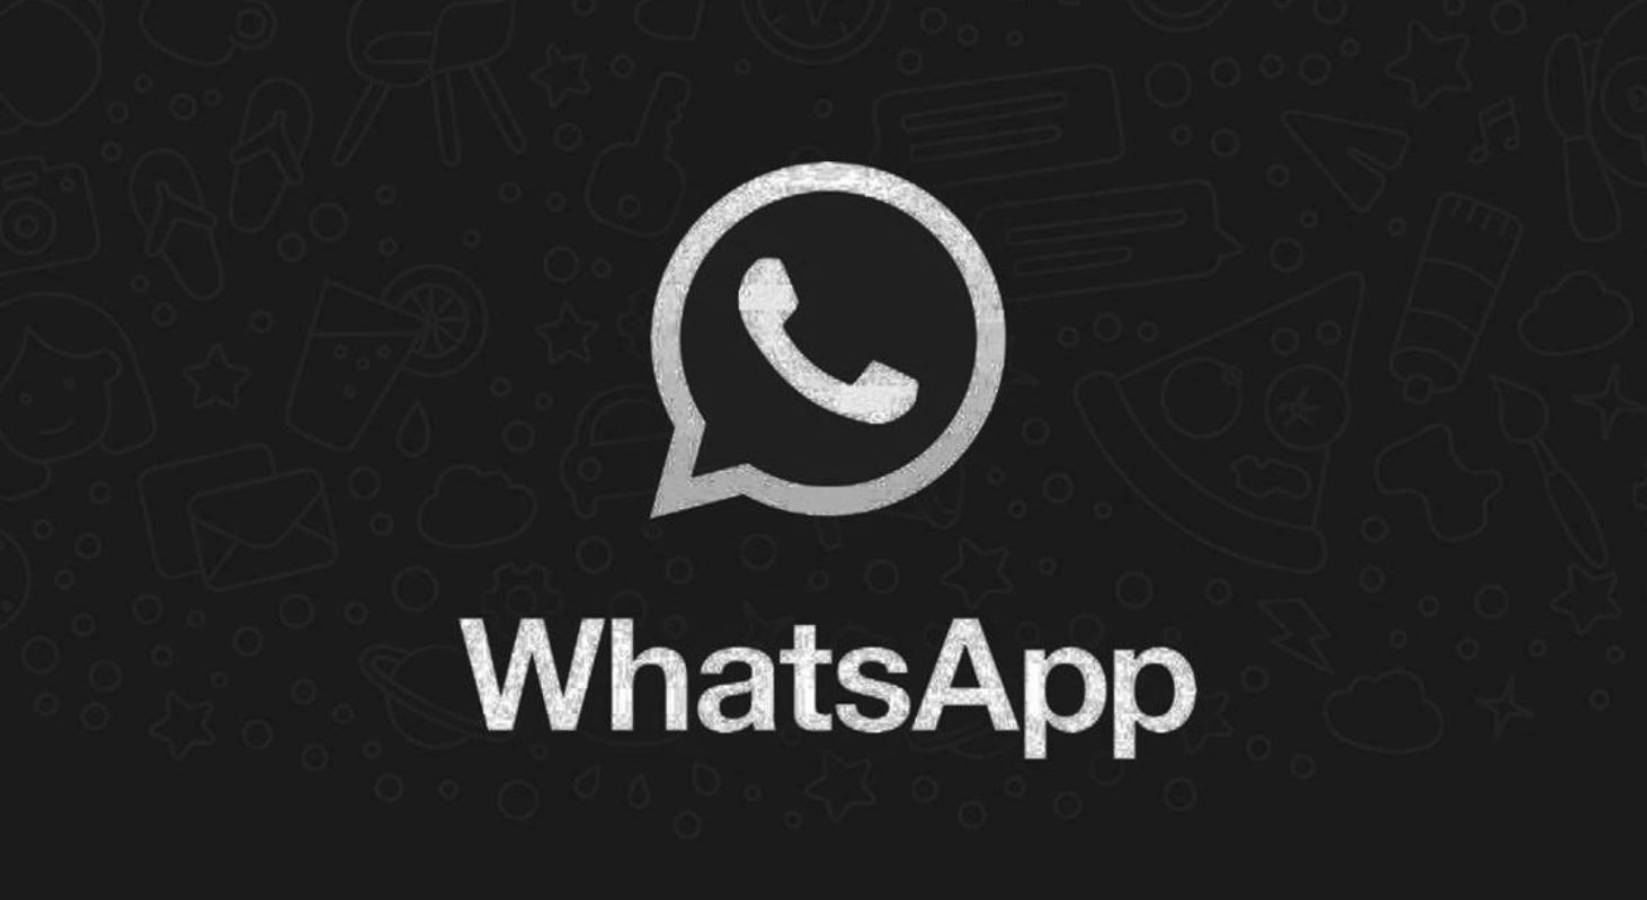 WhatsApp webb mörkt läge